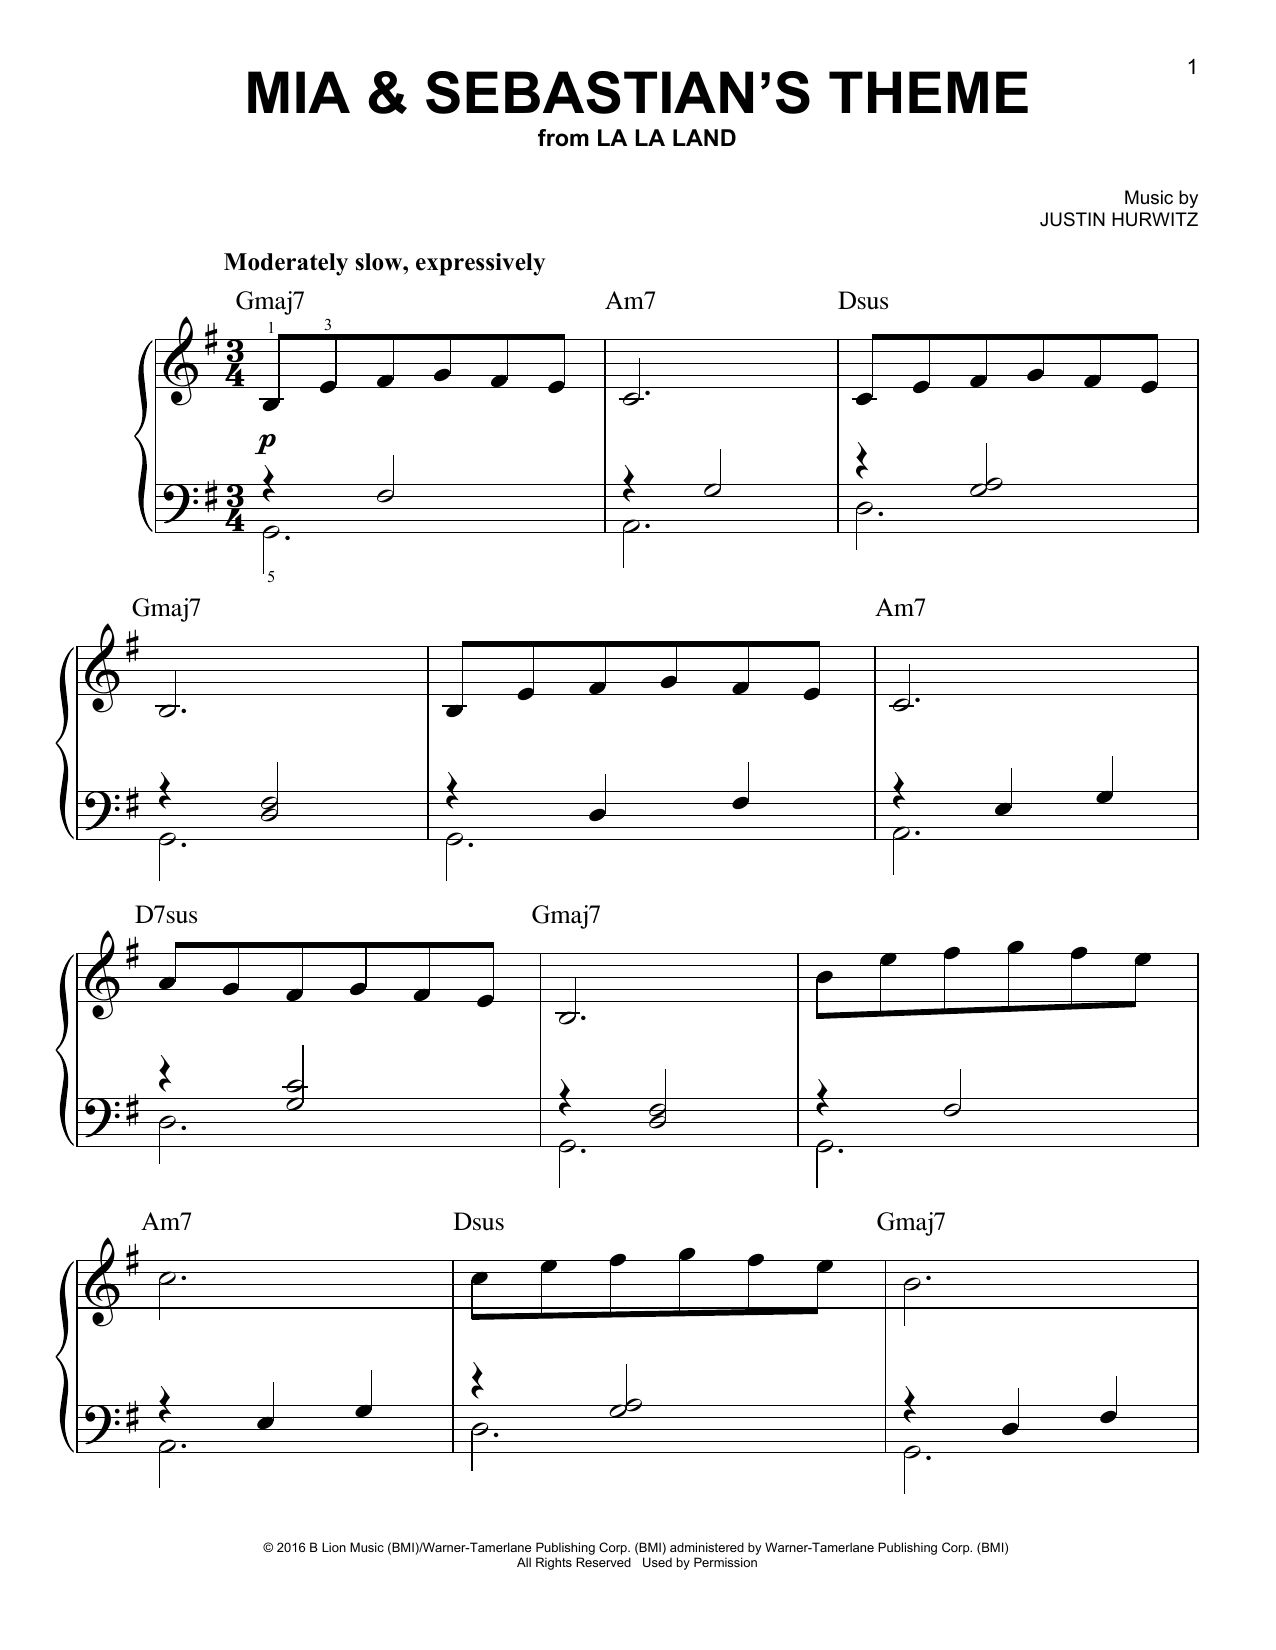 Justin Hurwitz Mia & Sebastian's Theme (from La La Land) Sheet Music Notes & Chords for Trombone Solo - Download or Print PDF